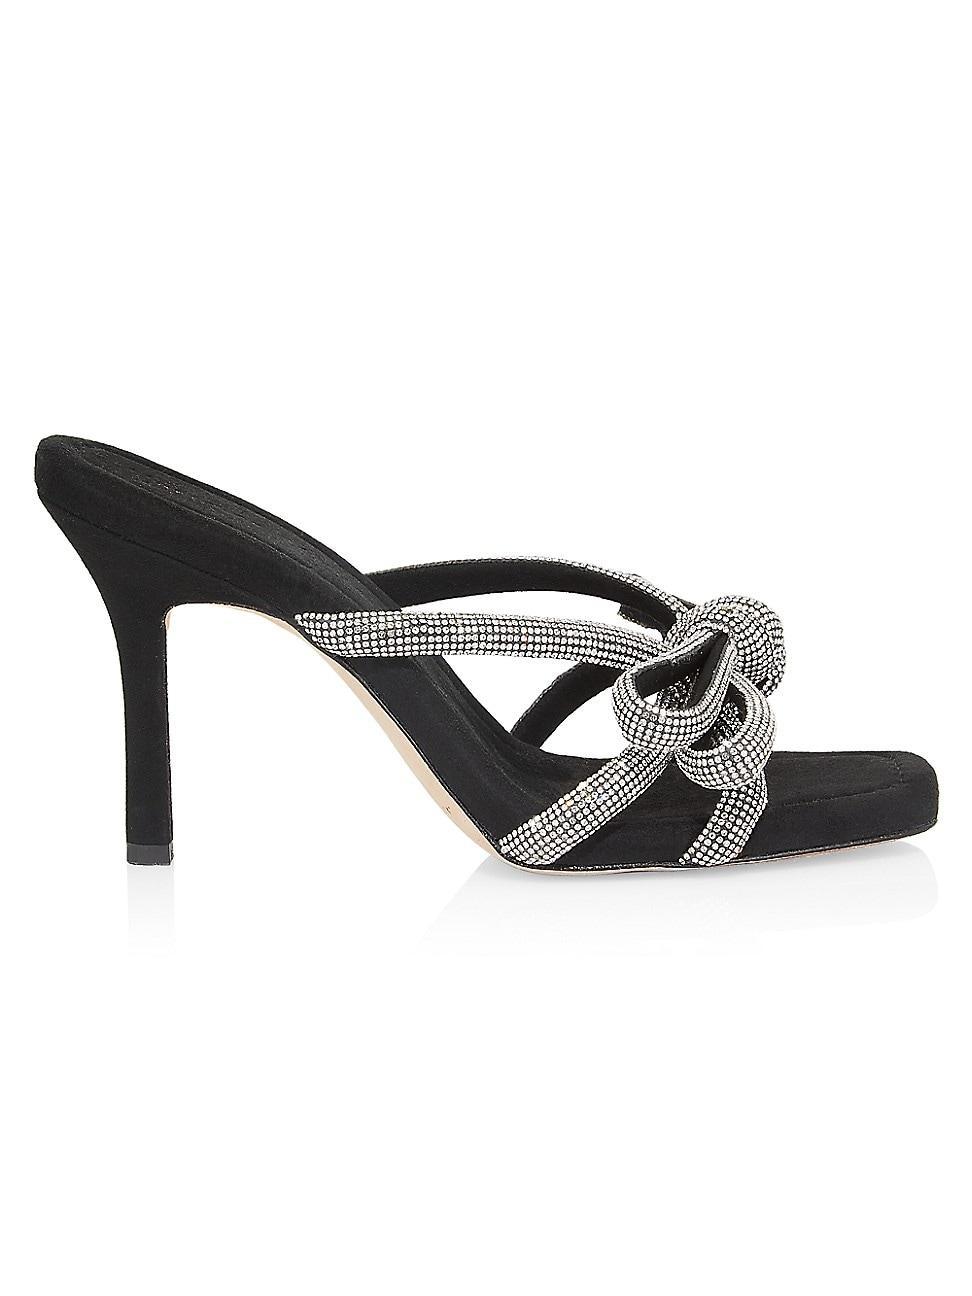 Margi Crystal Knot Mule Sandals Product Image